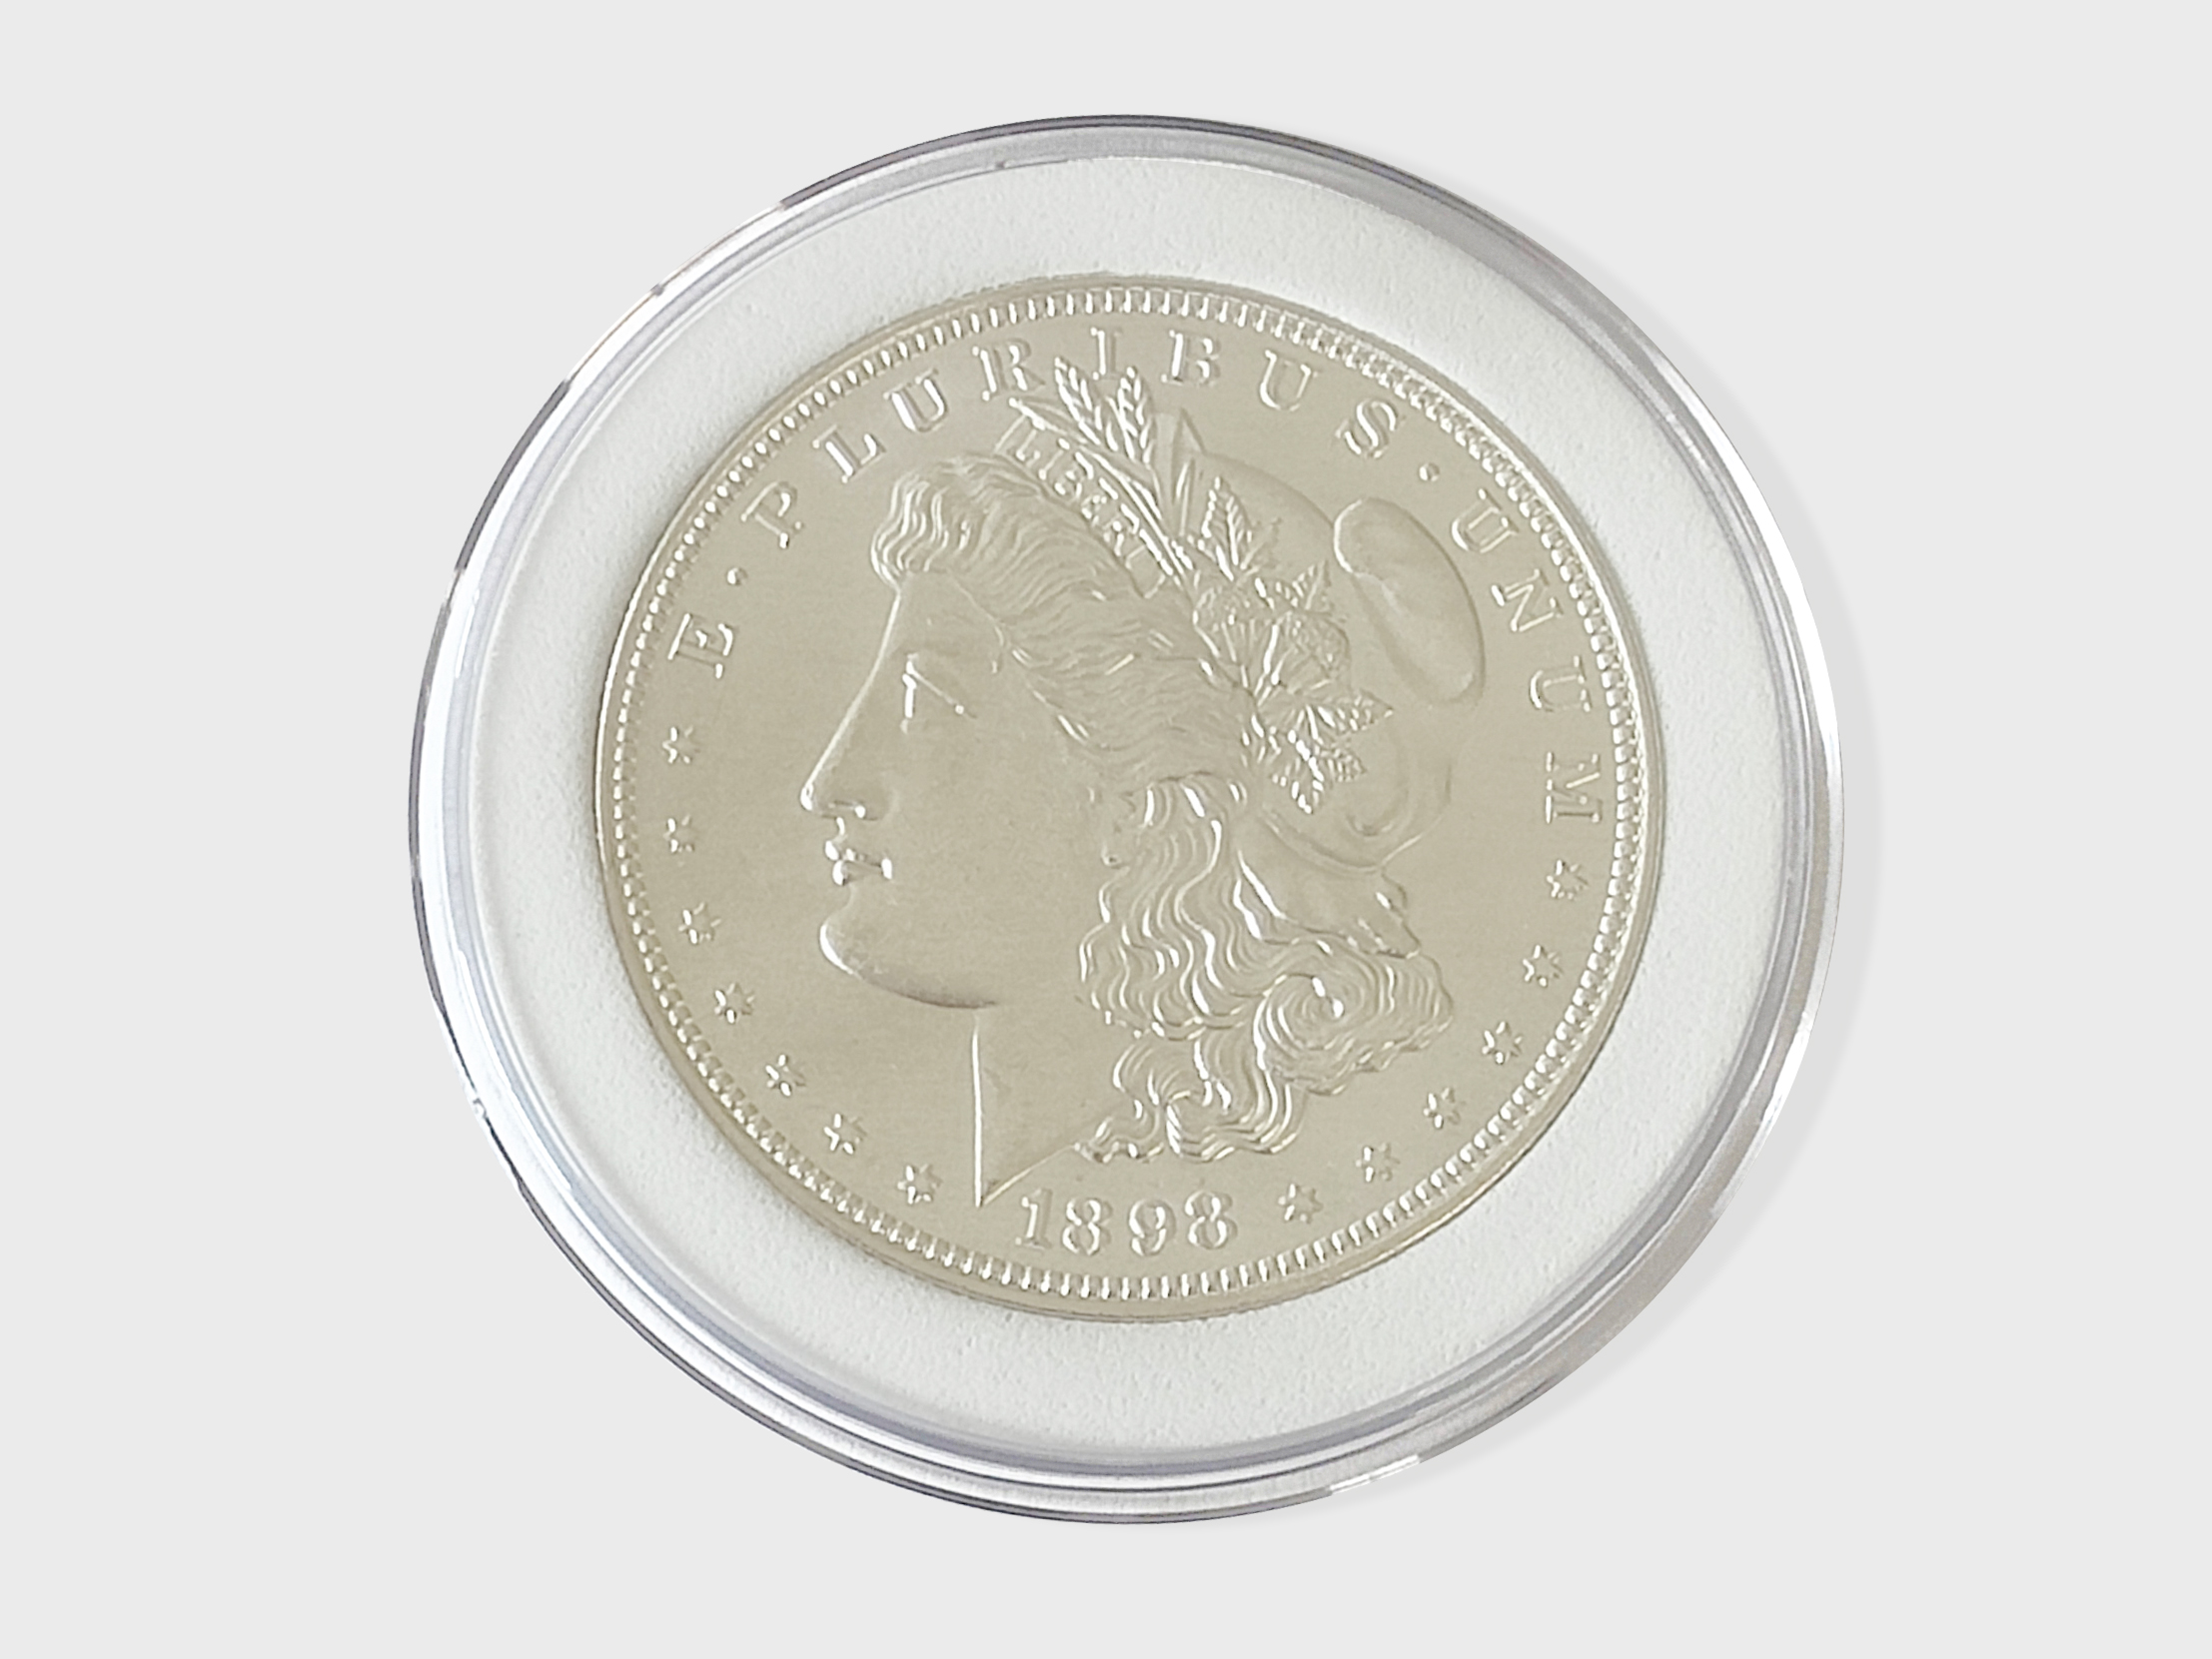 Regular Morgan Coin